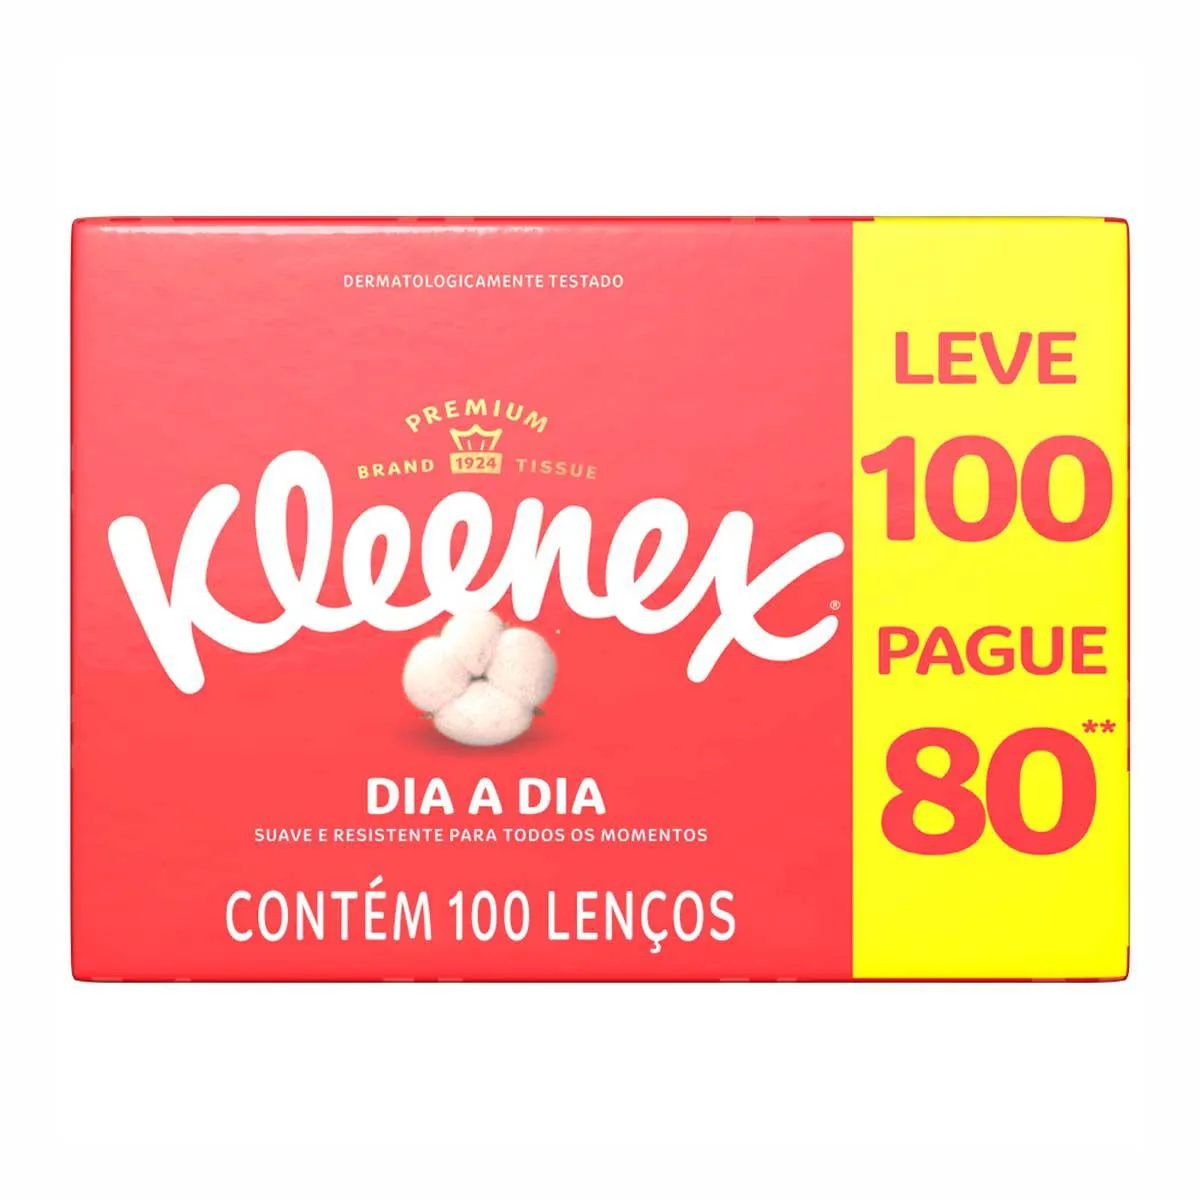 Lenços Kleenex Box Leve 100 Pague 80 image number 0